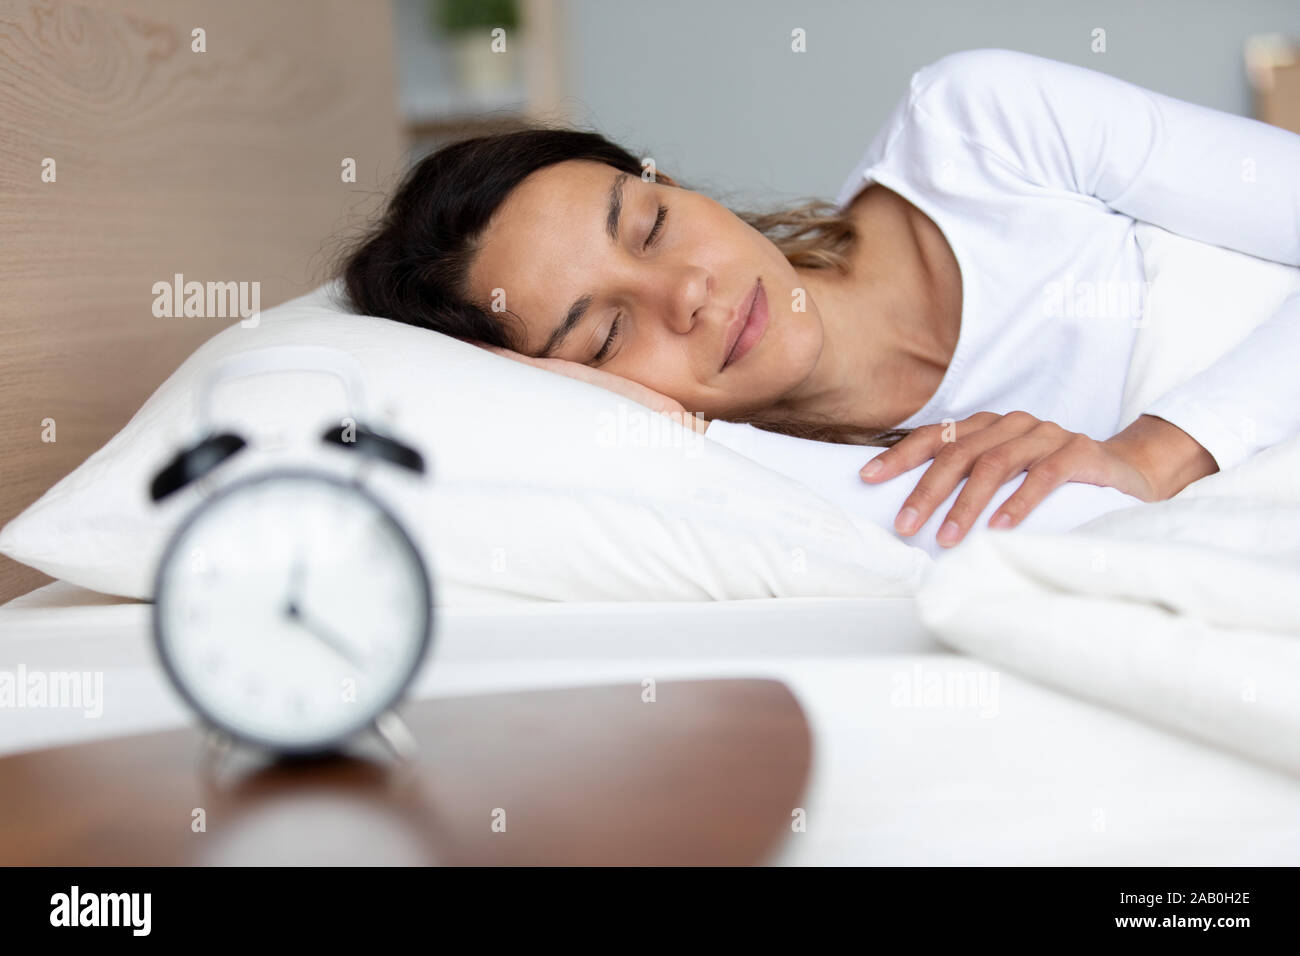 Sleeping giovane donna gustare fresche lenzuola e sogni dolci Foto Stock